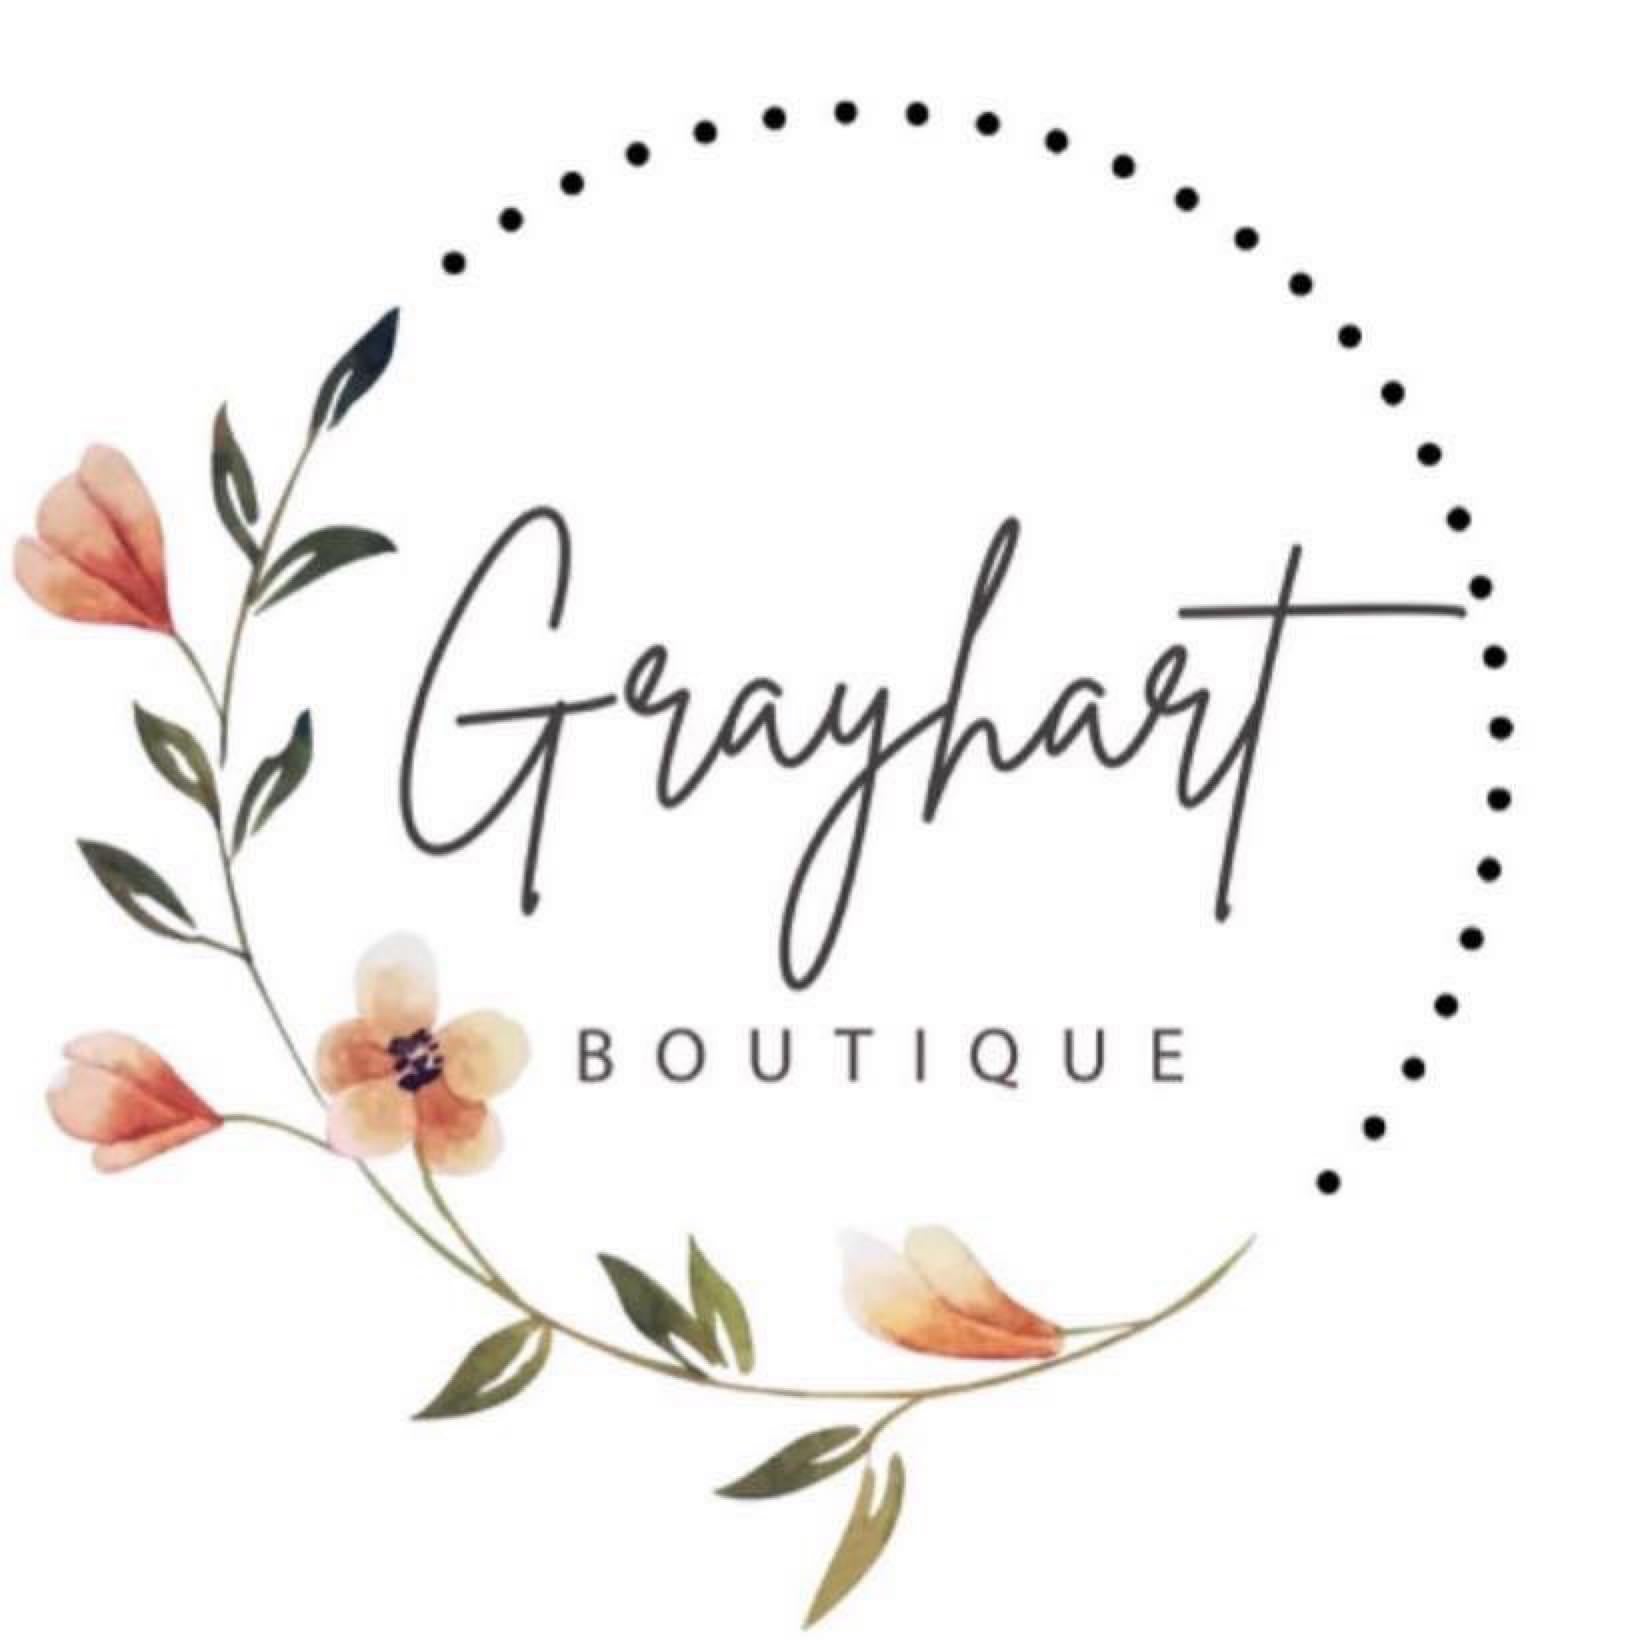 Grayhart Boutique